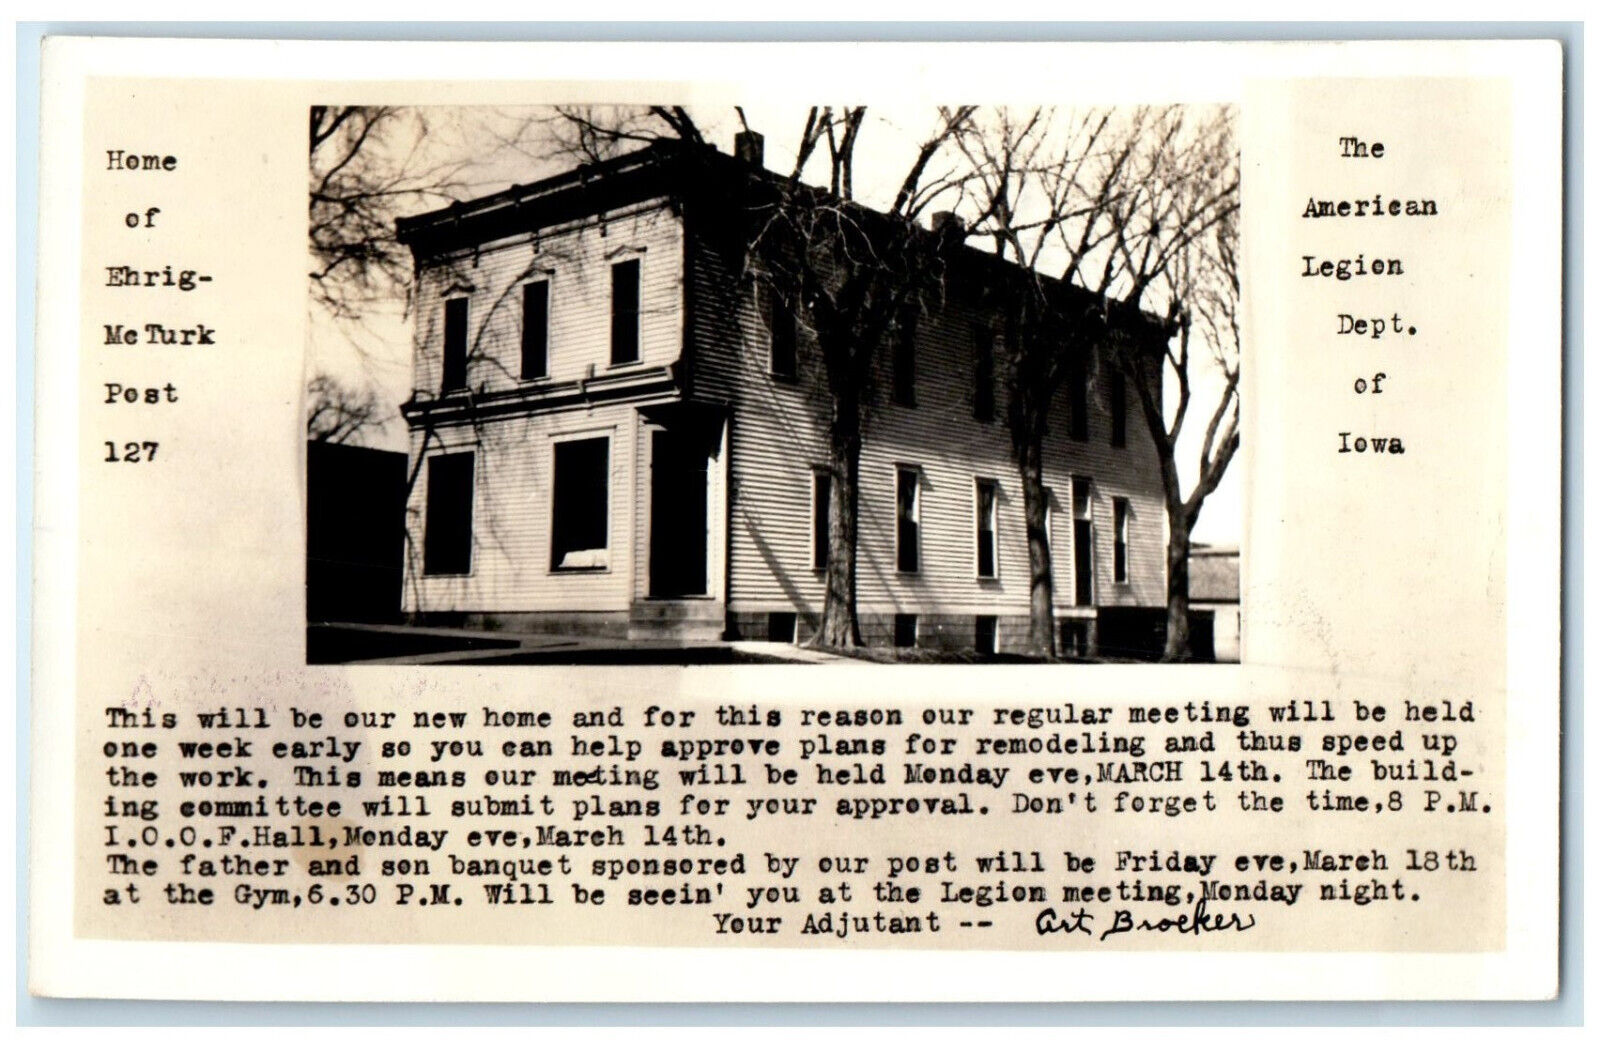 Gladbrook Iowa IA RPPC Photo Postcard Home of Ehrigmeturk Post 127 1938